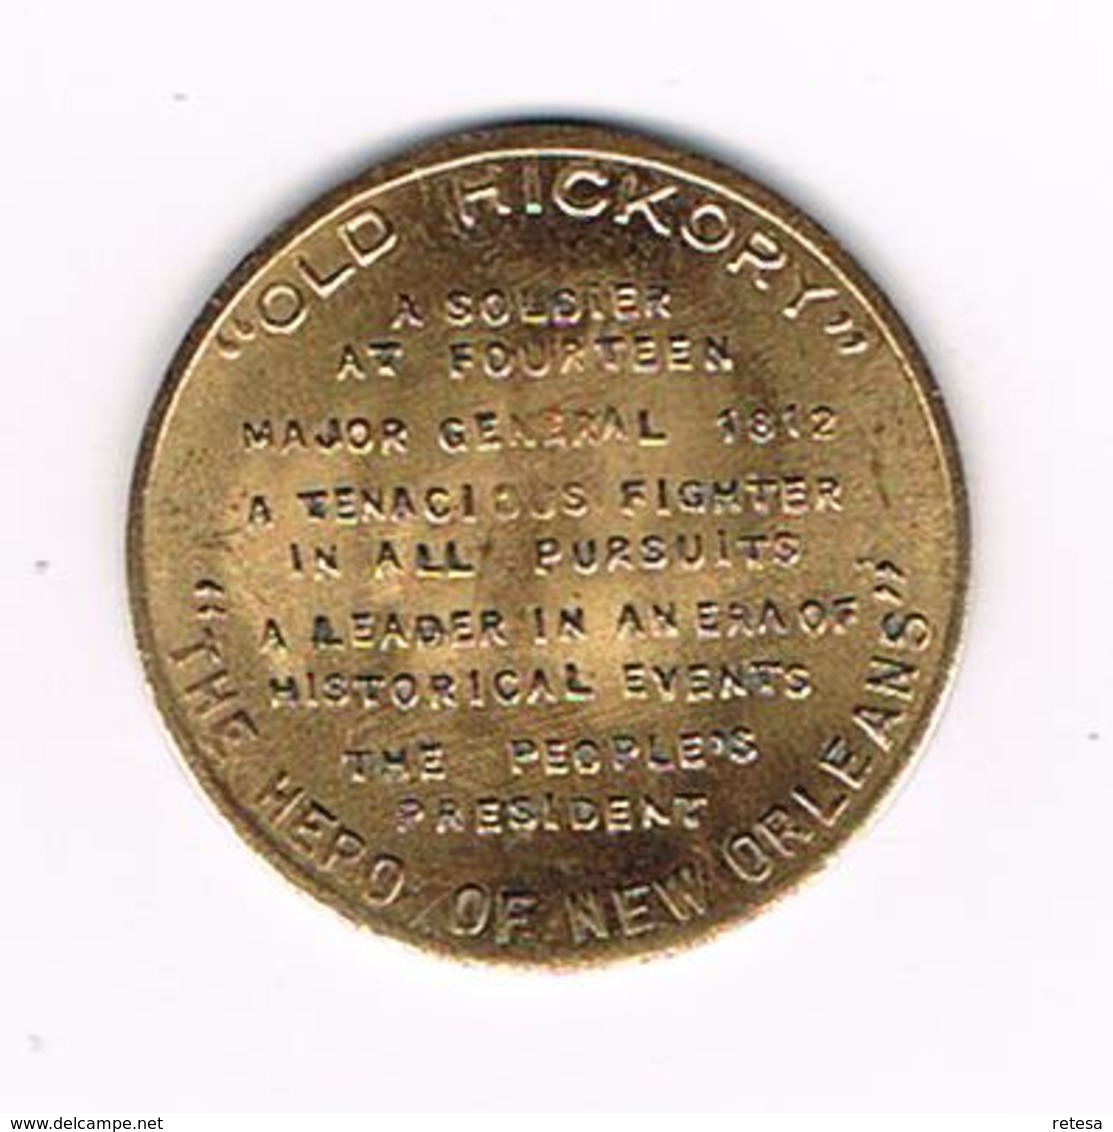 &- PENNING  ANDREW  JACKSON  7 TH  PRESIDENT  U.S.A. - Monedas Elongadas (elongated Coins)